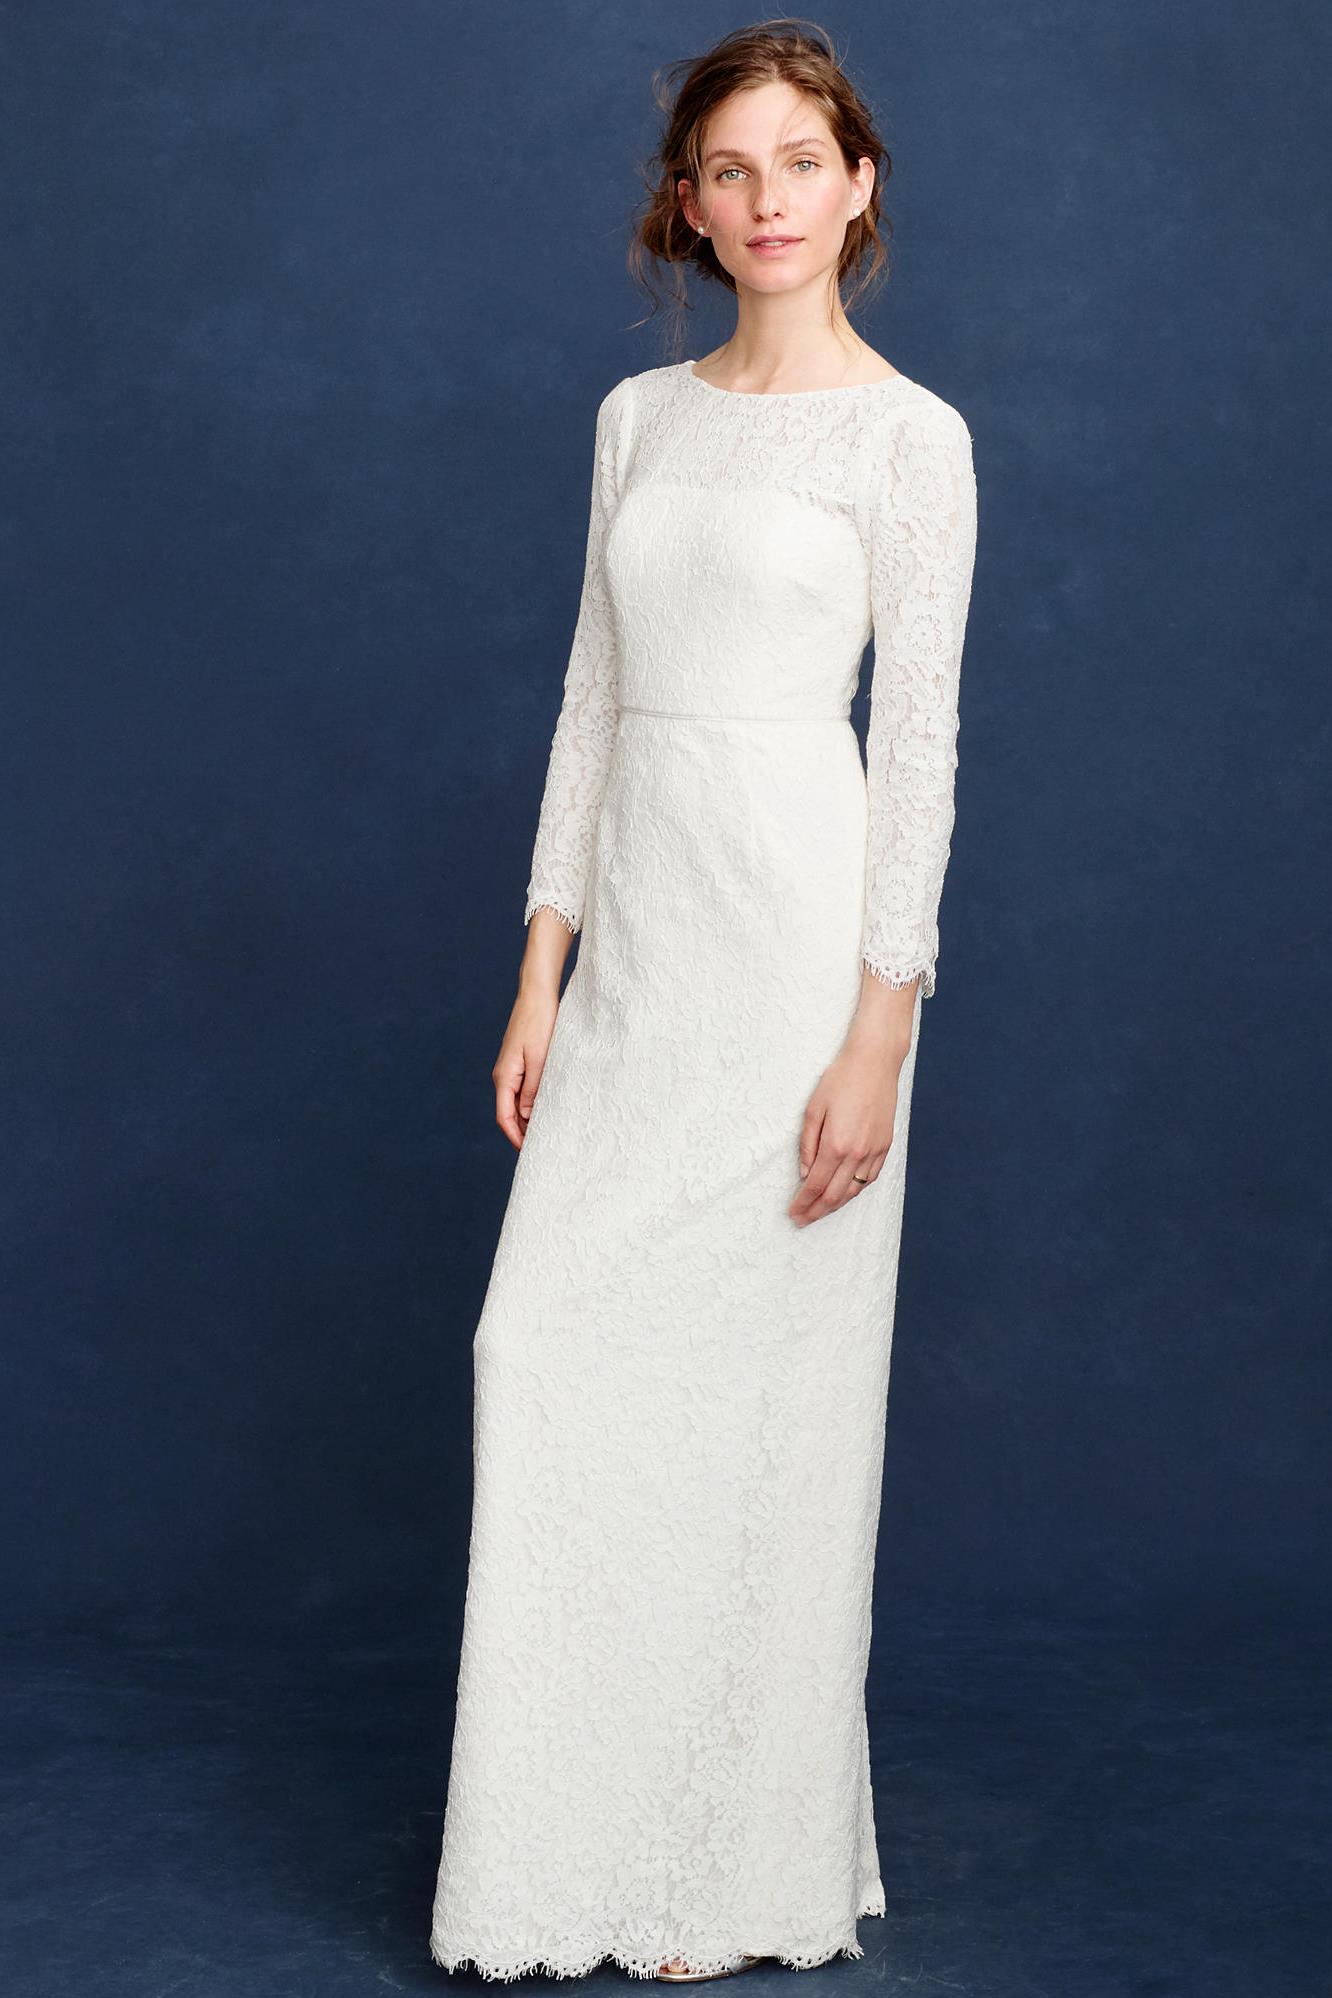 Lace Wedding Dress Under $1000